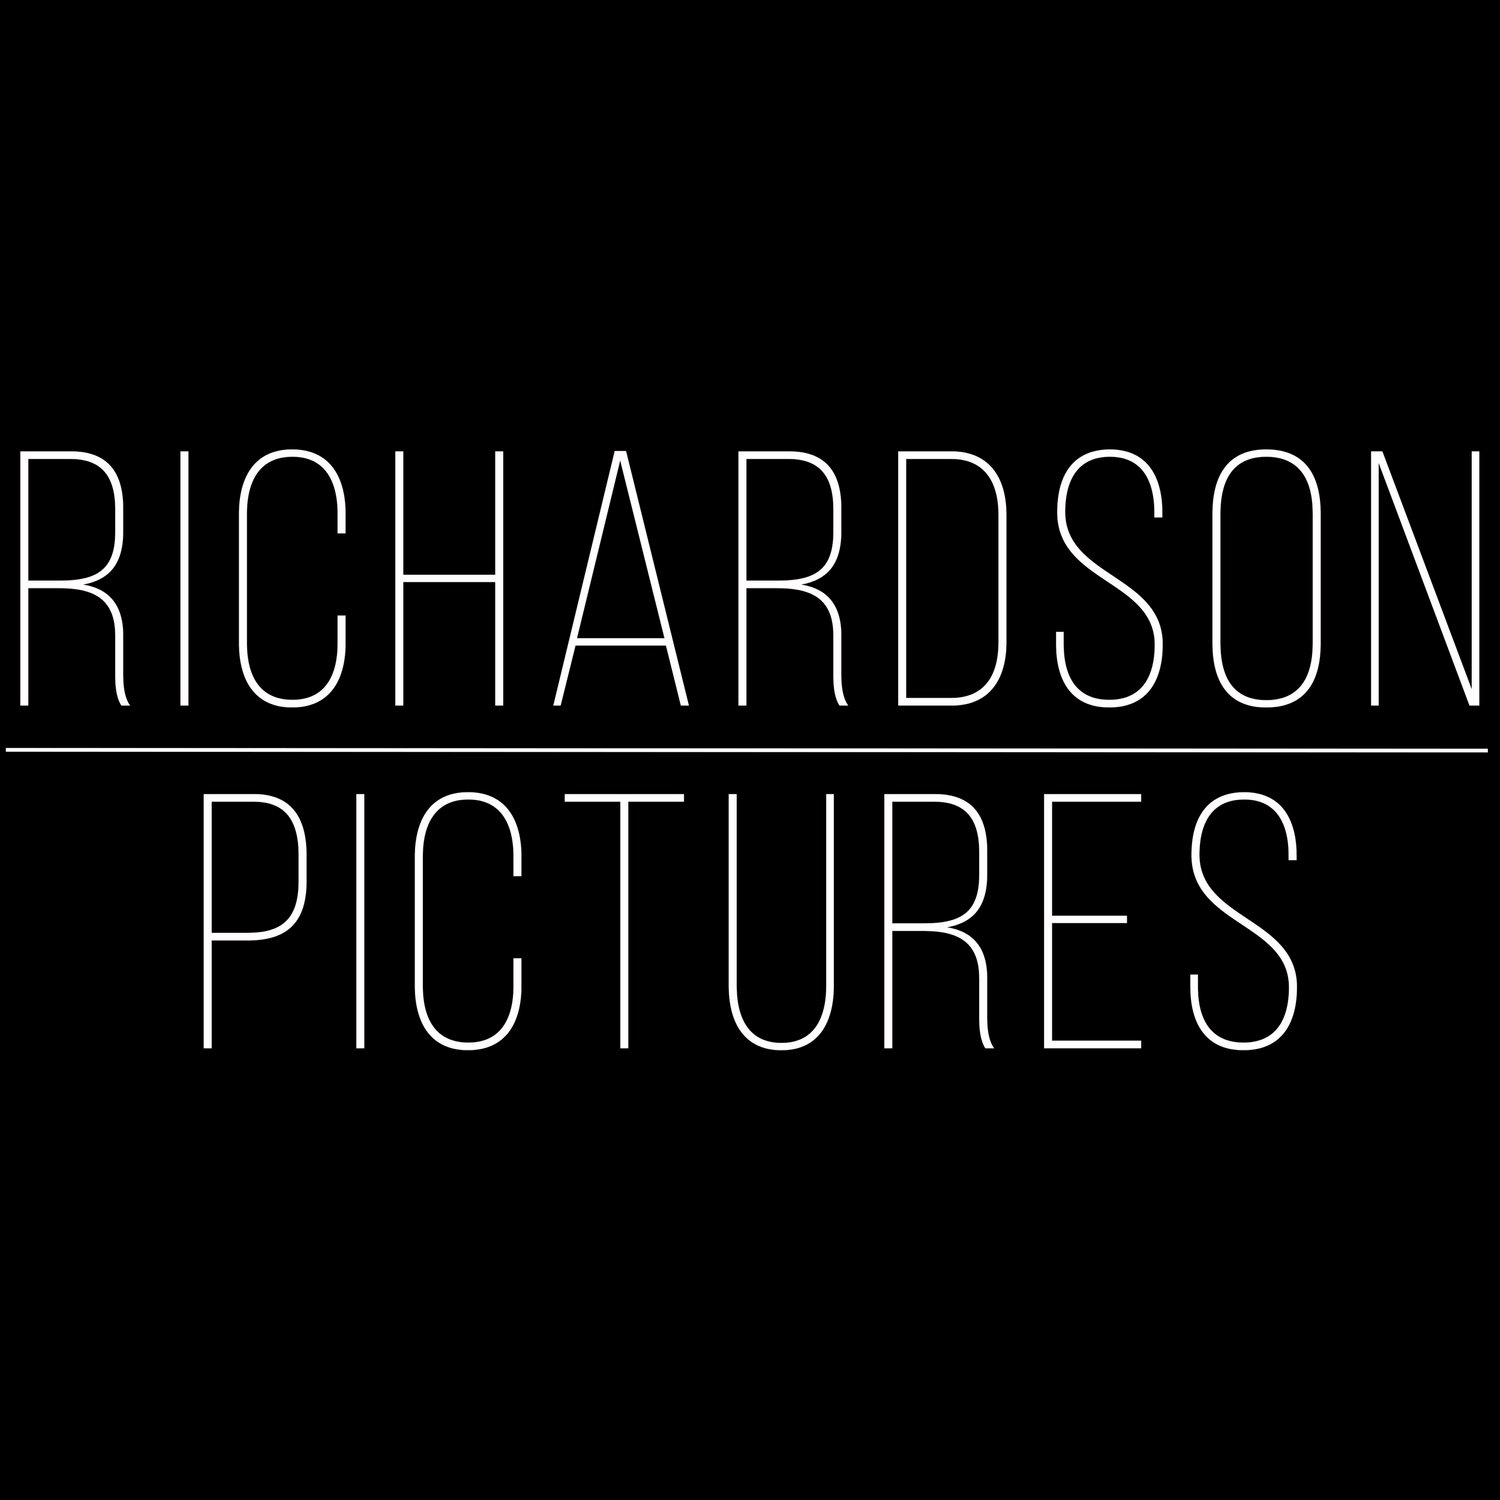 Richardson Pictures